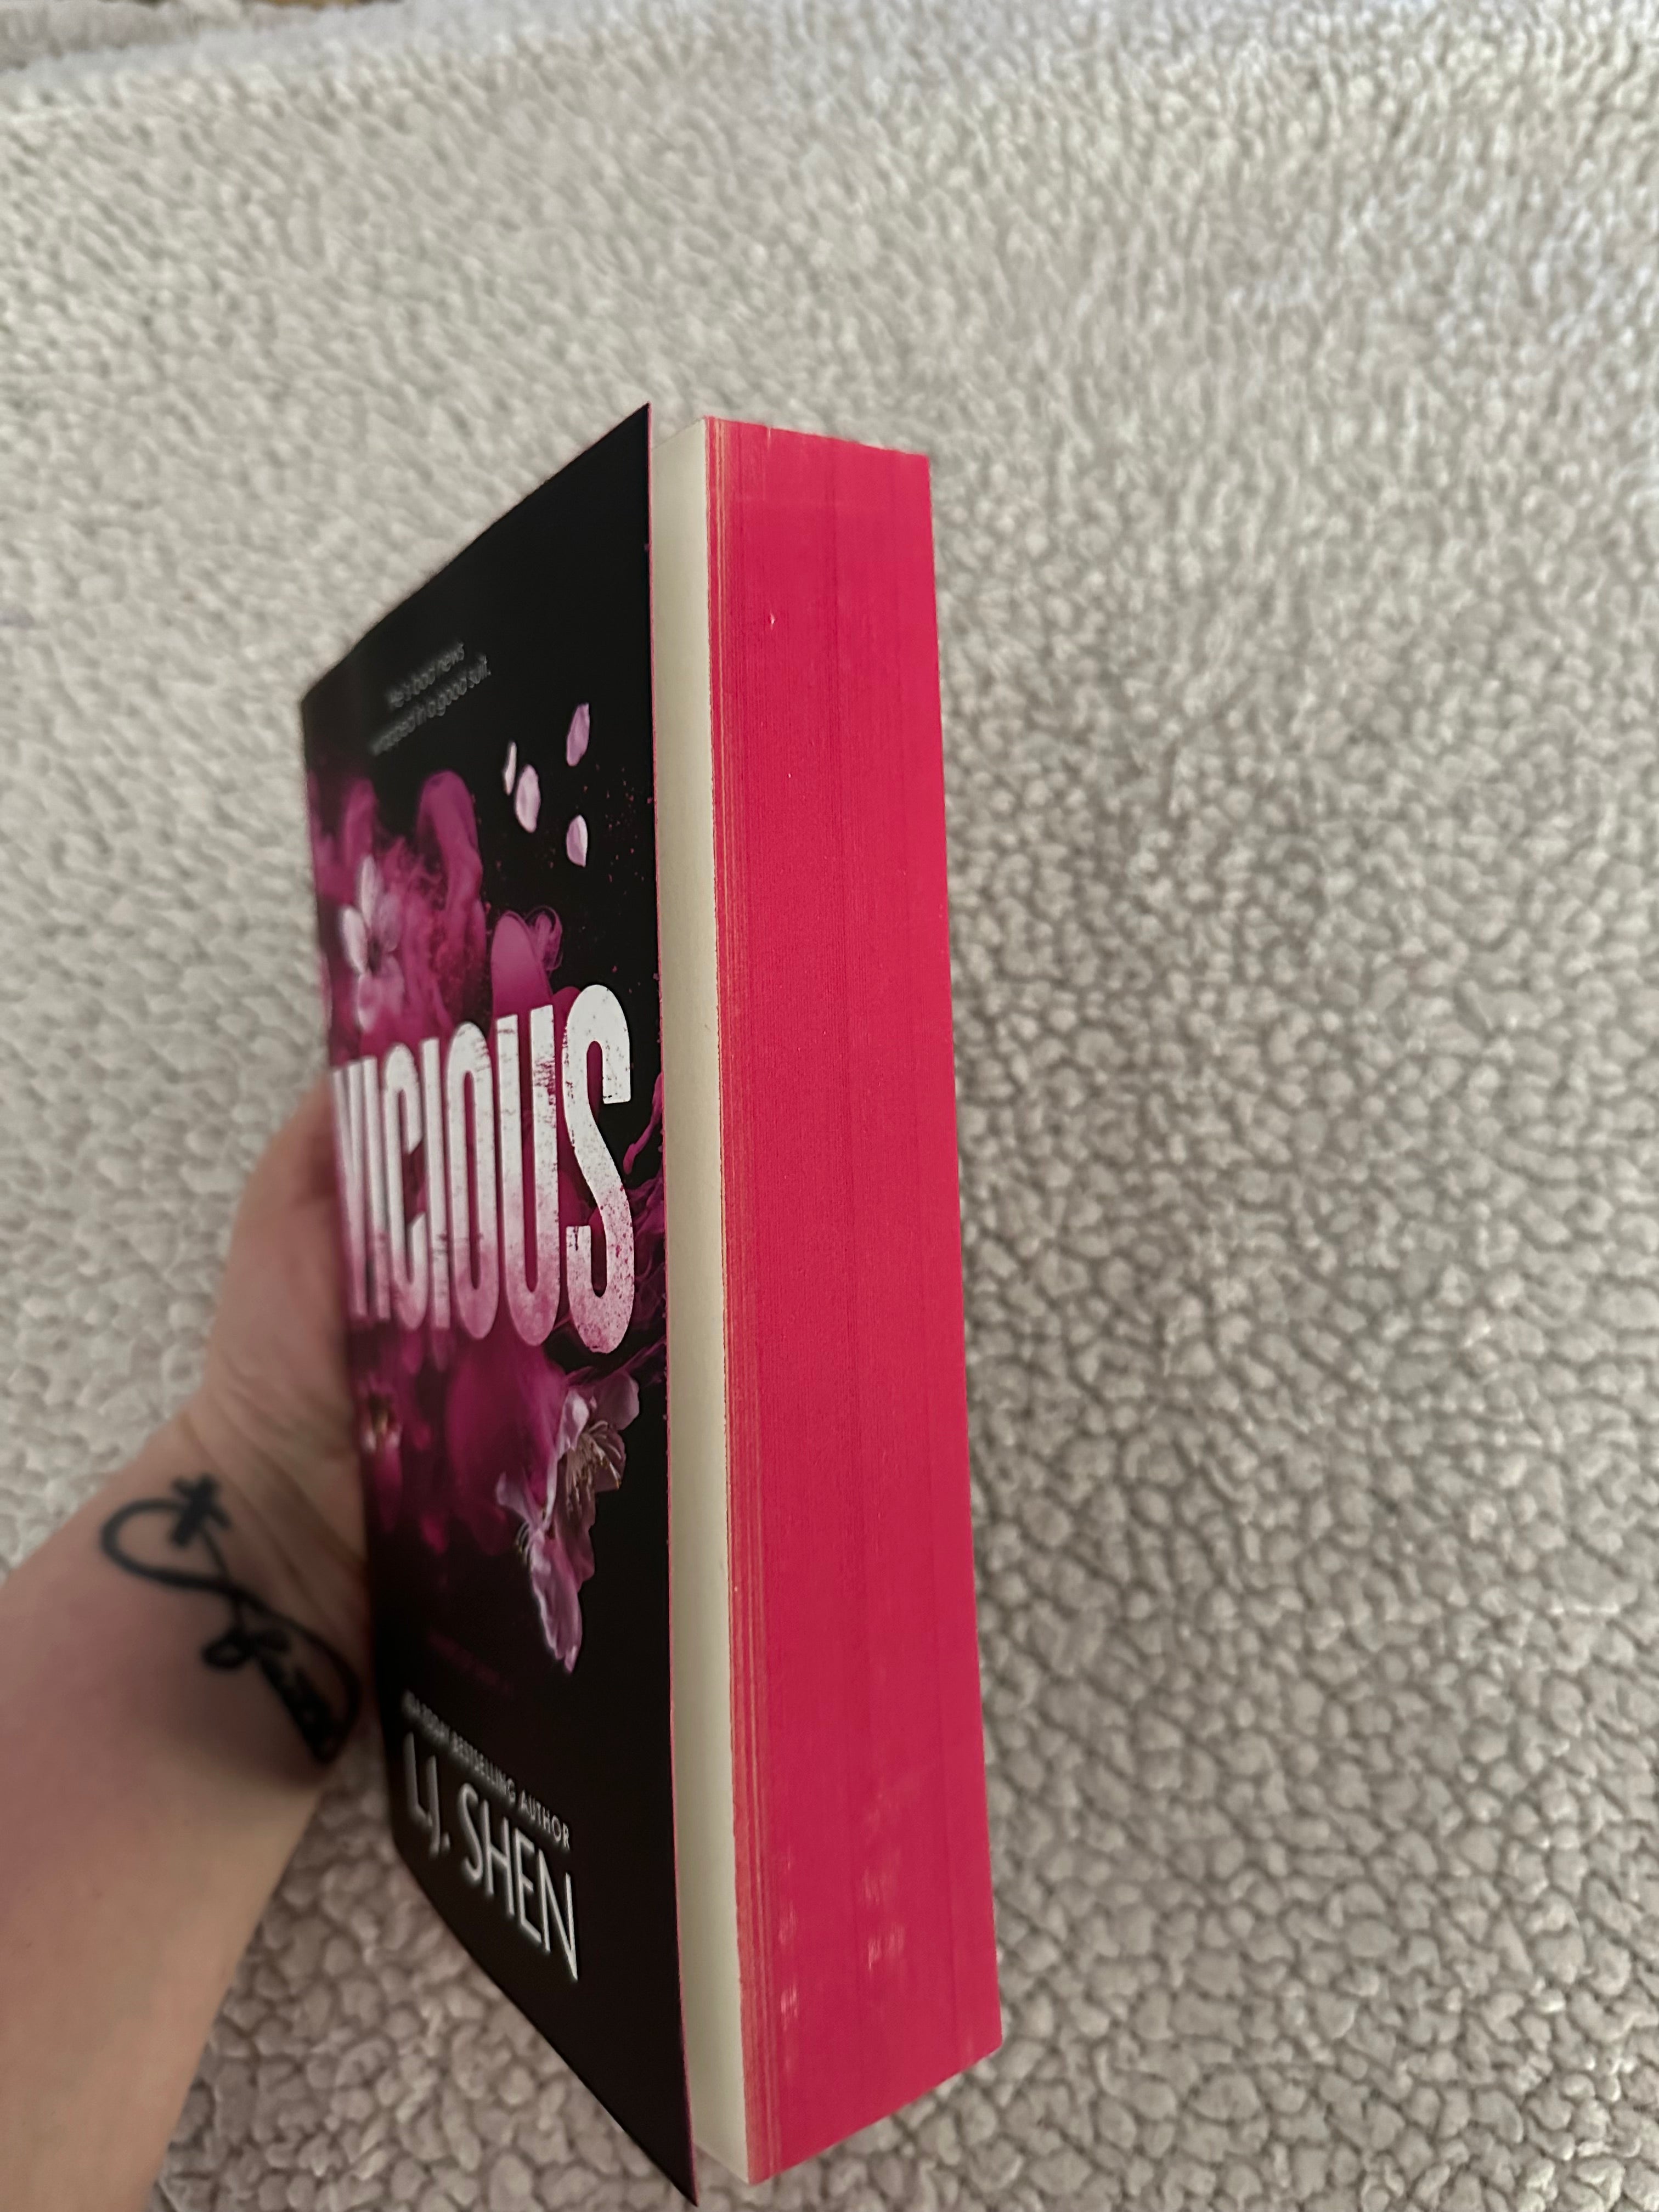 Vicious – Arctos Bookish Den